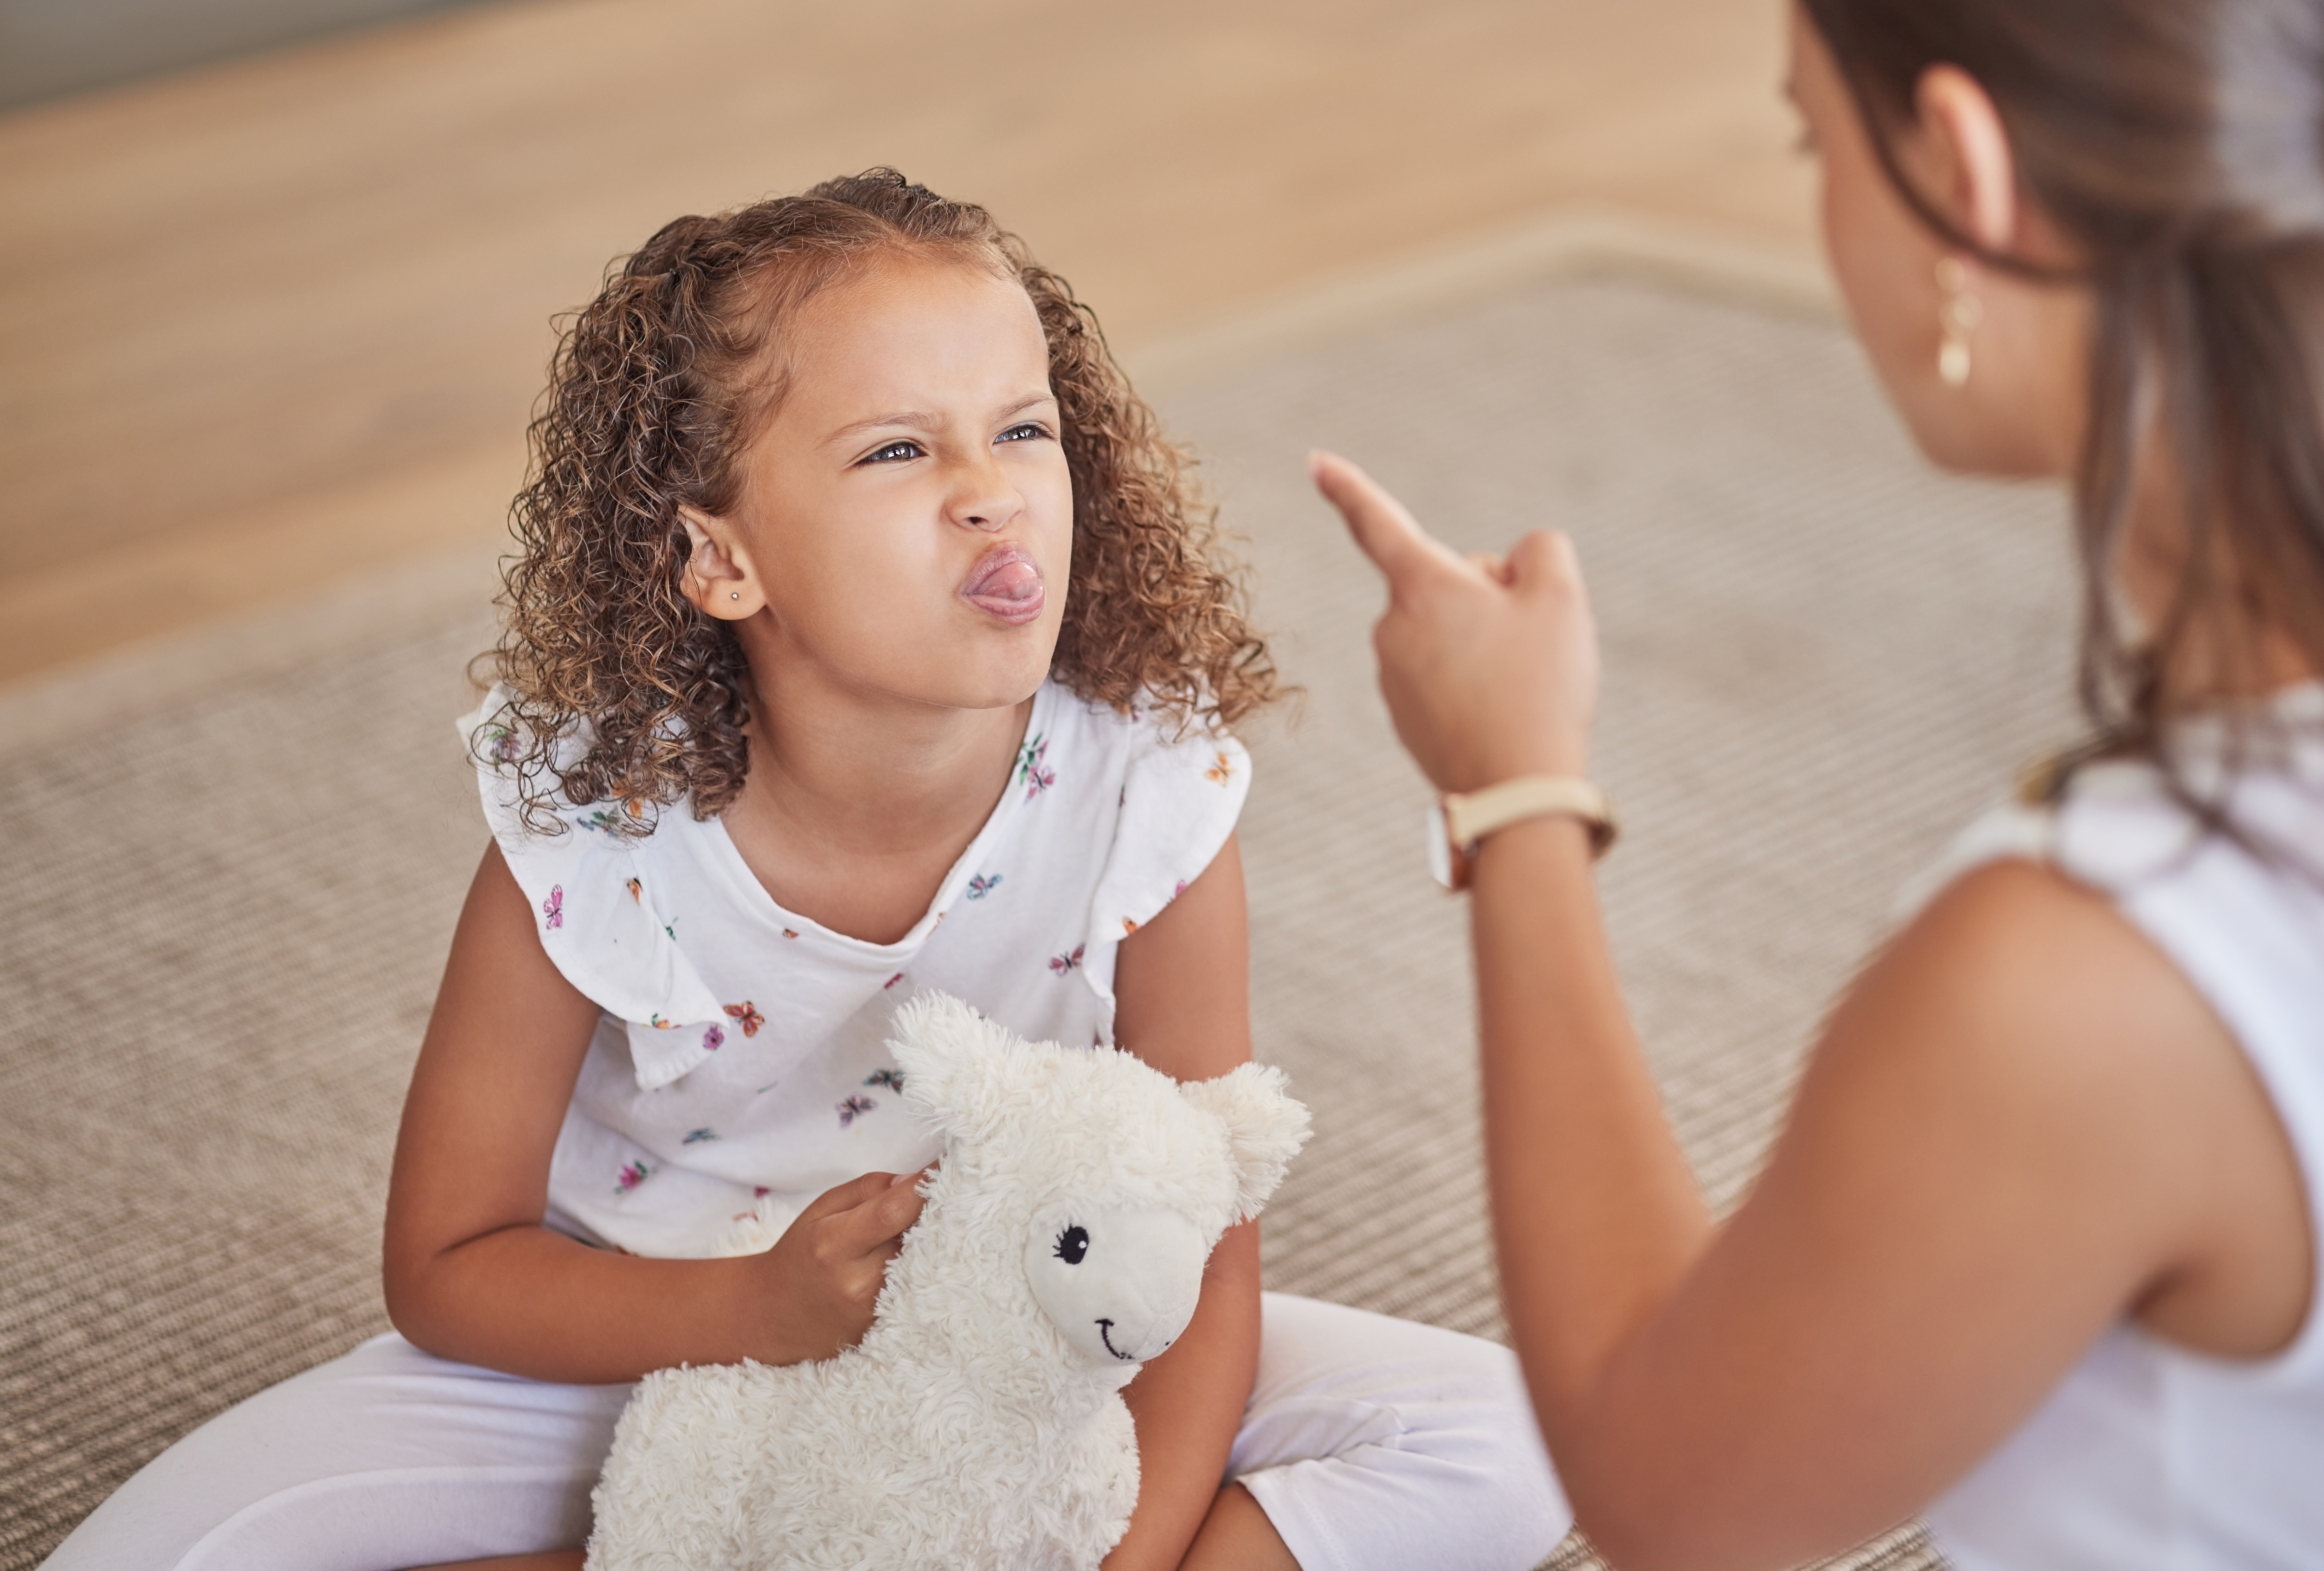 A mother reprimanding her daughter | Source: Shutterstock